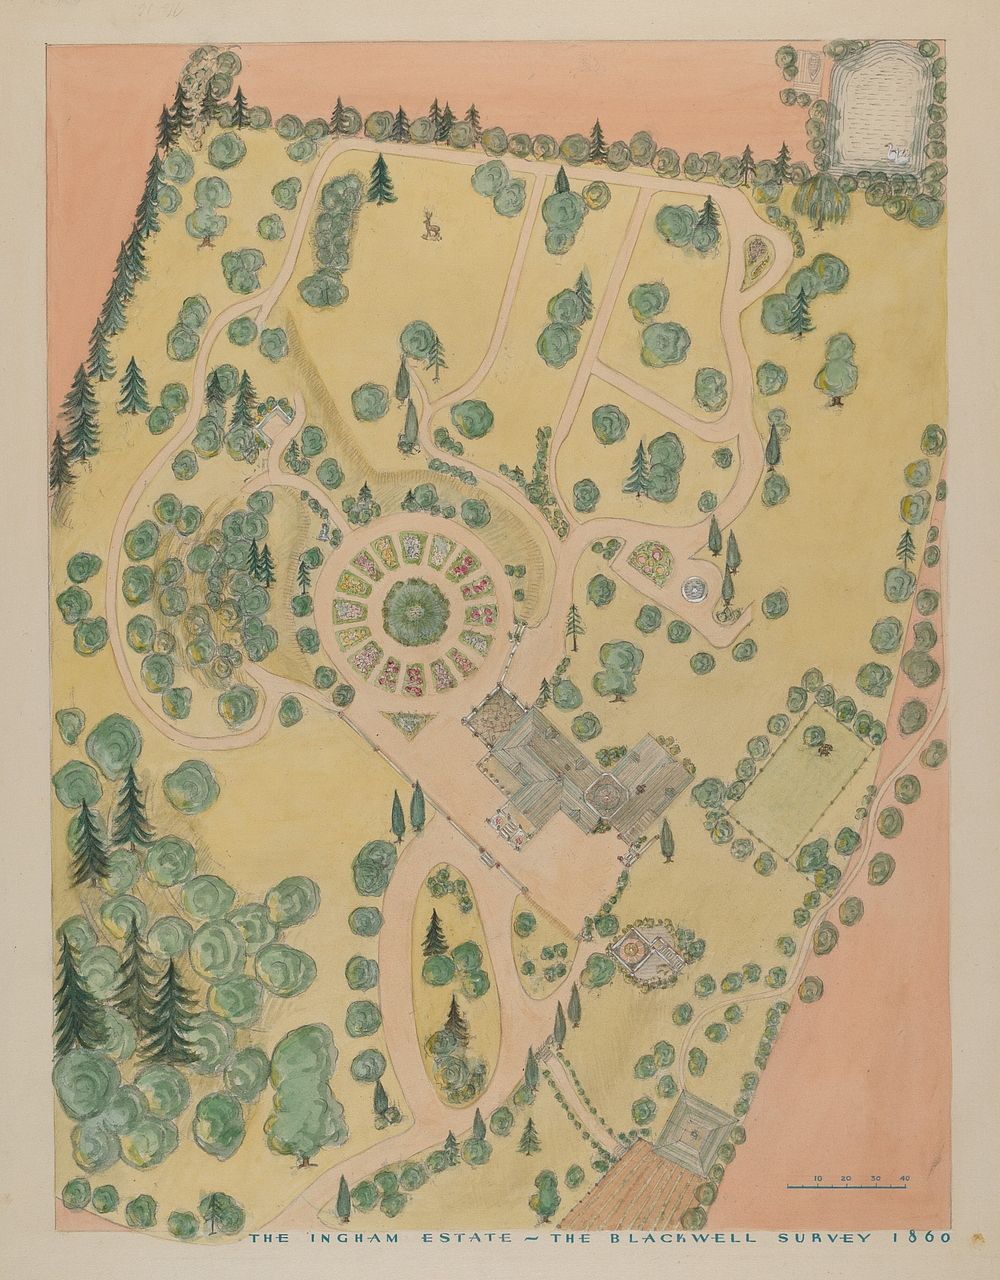 Thomas Ingham Estate (ca. 1936) by Virginia Richards, William Merklin and Gilbert Sackerman.  